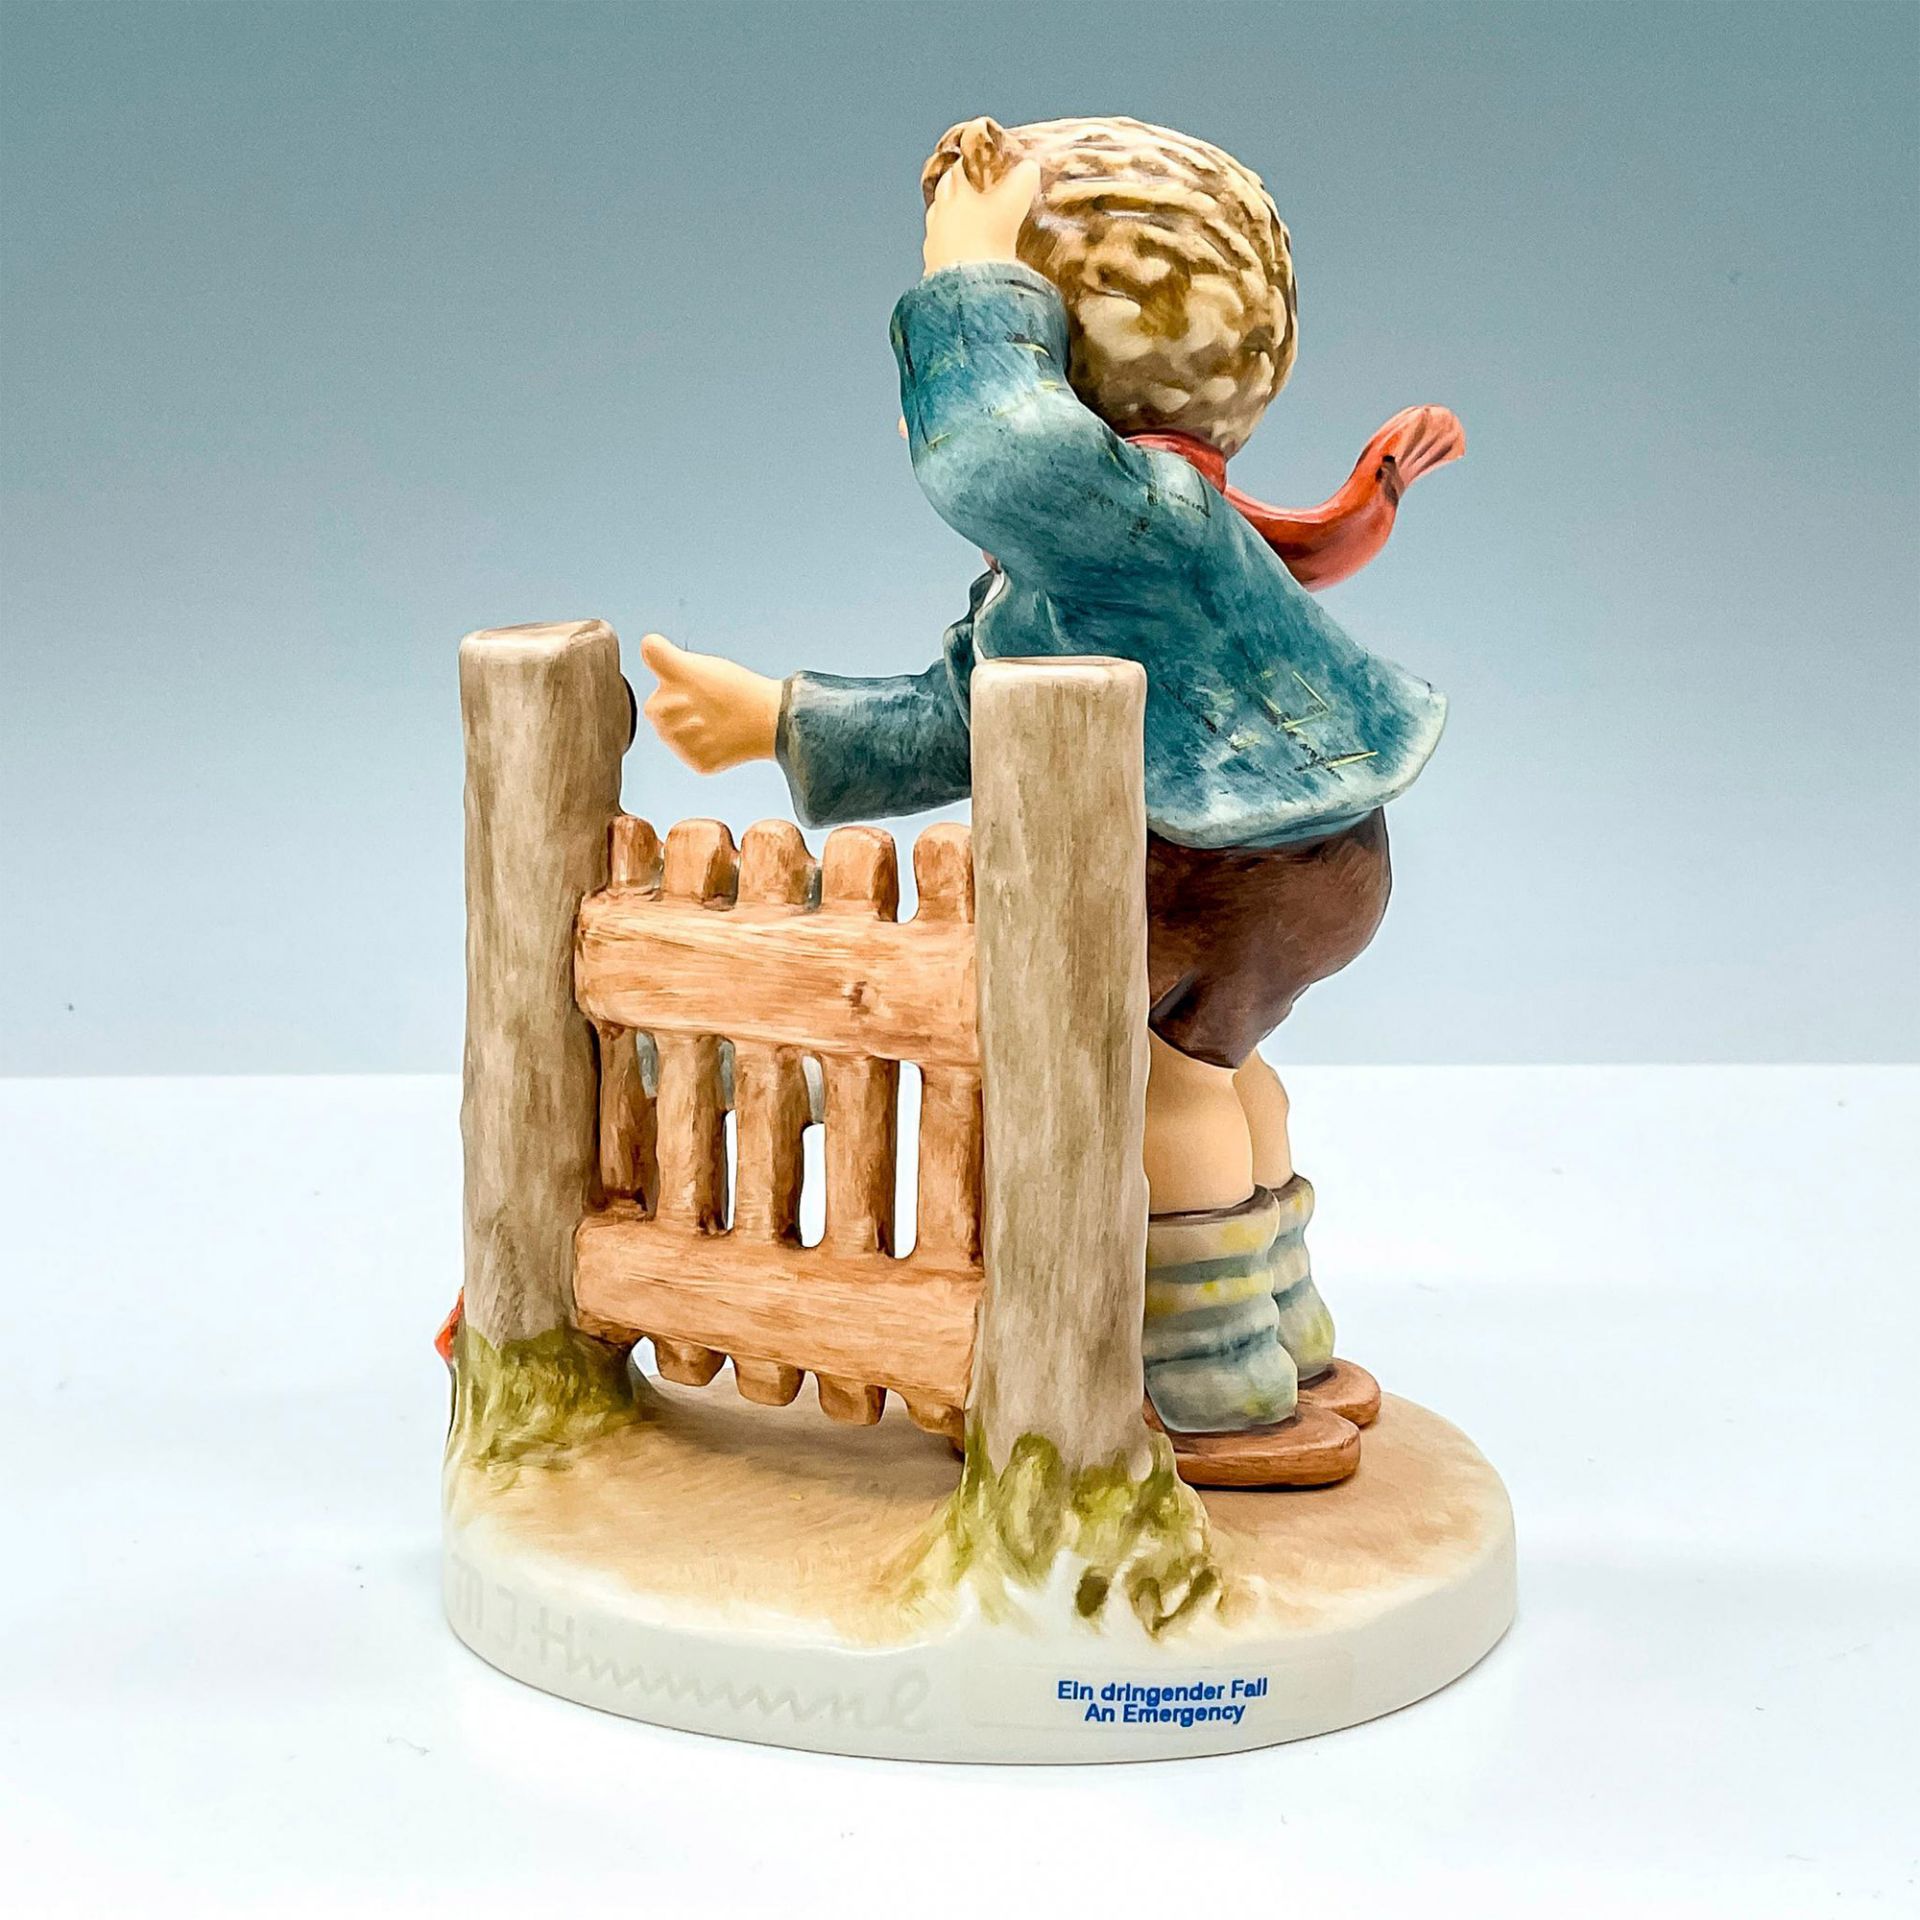 Goebel Hummel Porcelain Figurine, An Emergency HUM436 - Image 2 of 3